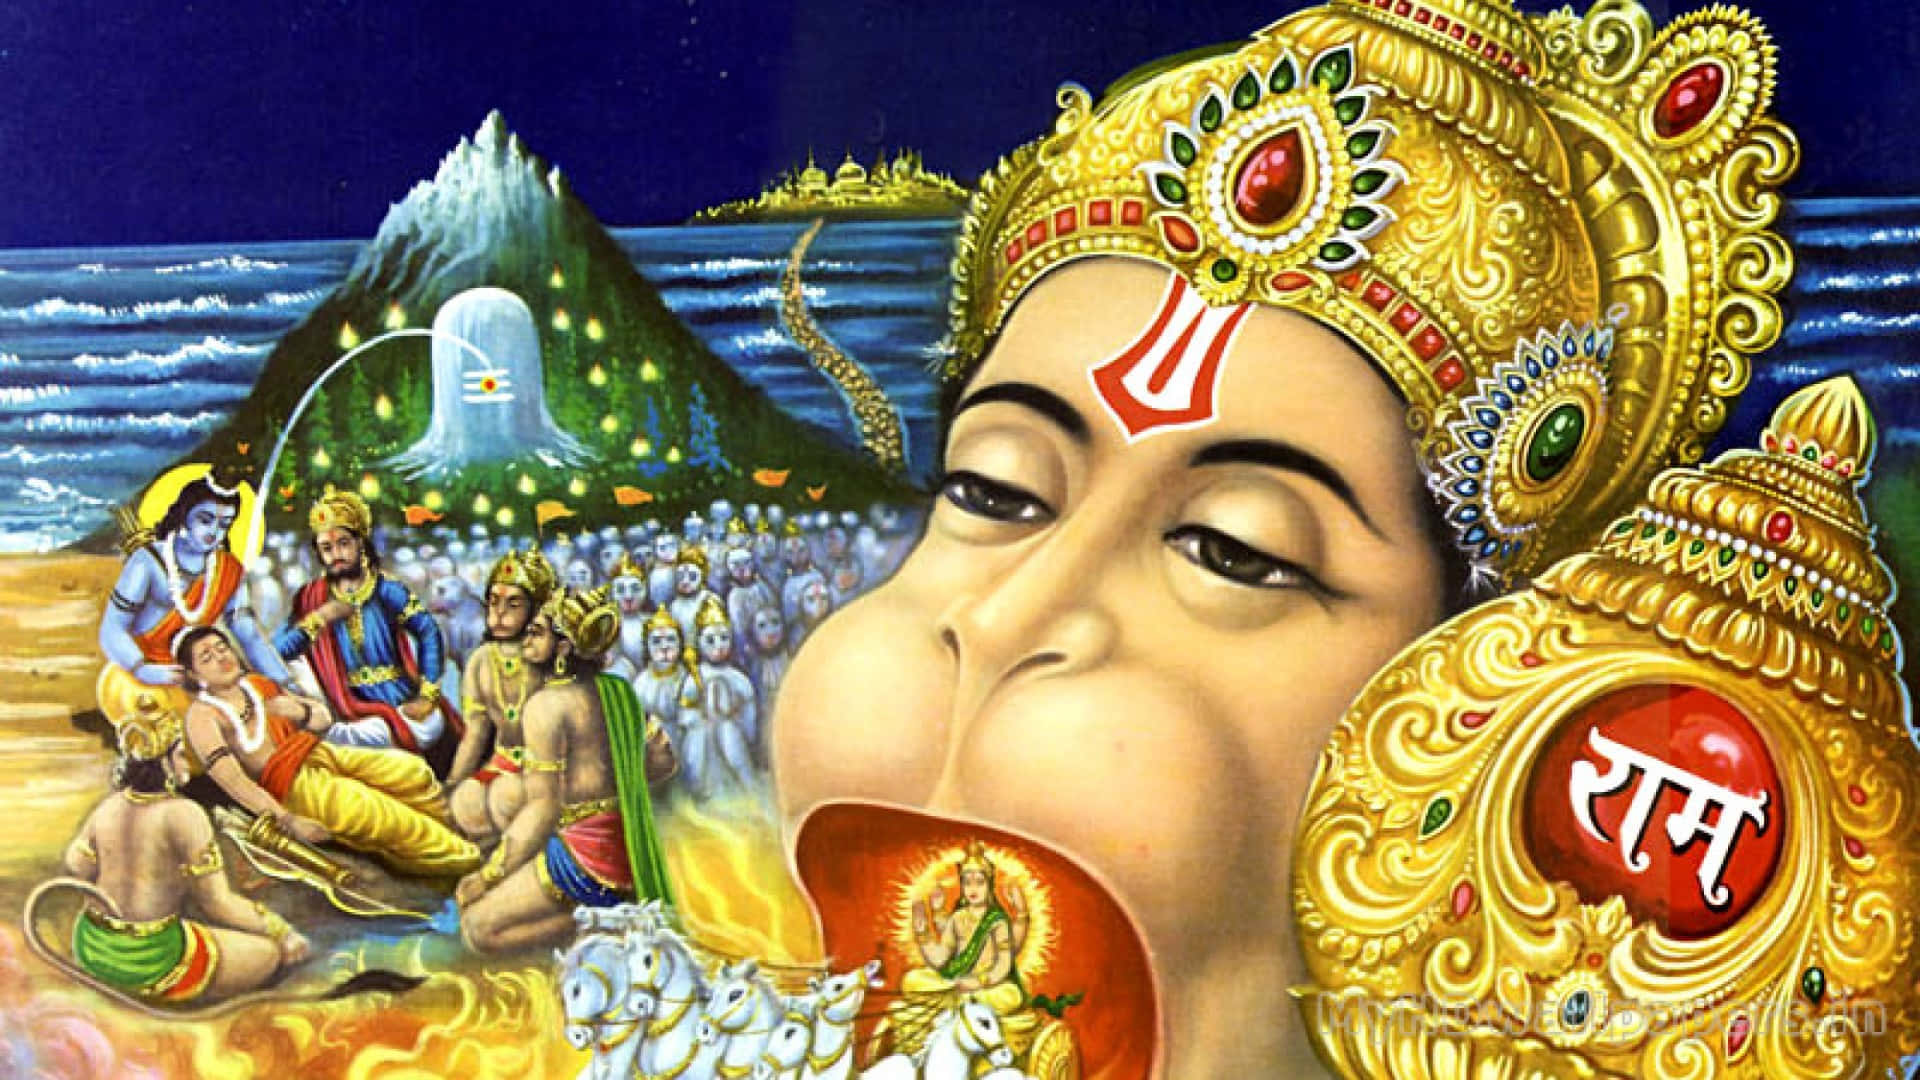 A majestic depiction of Lord Hanuman